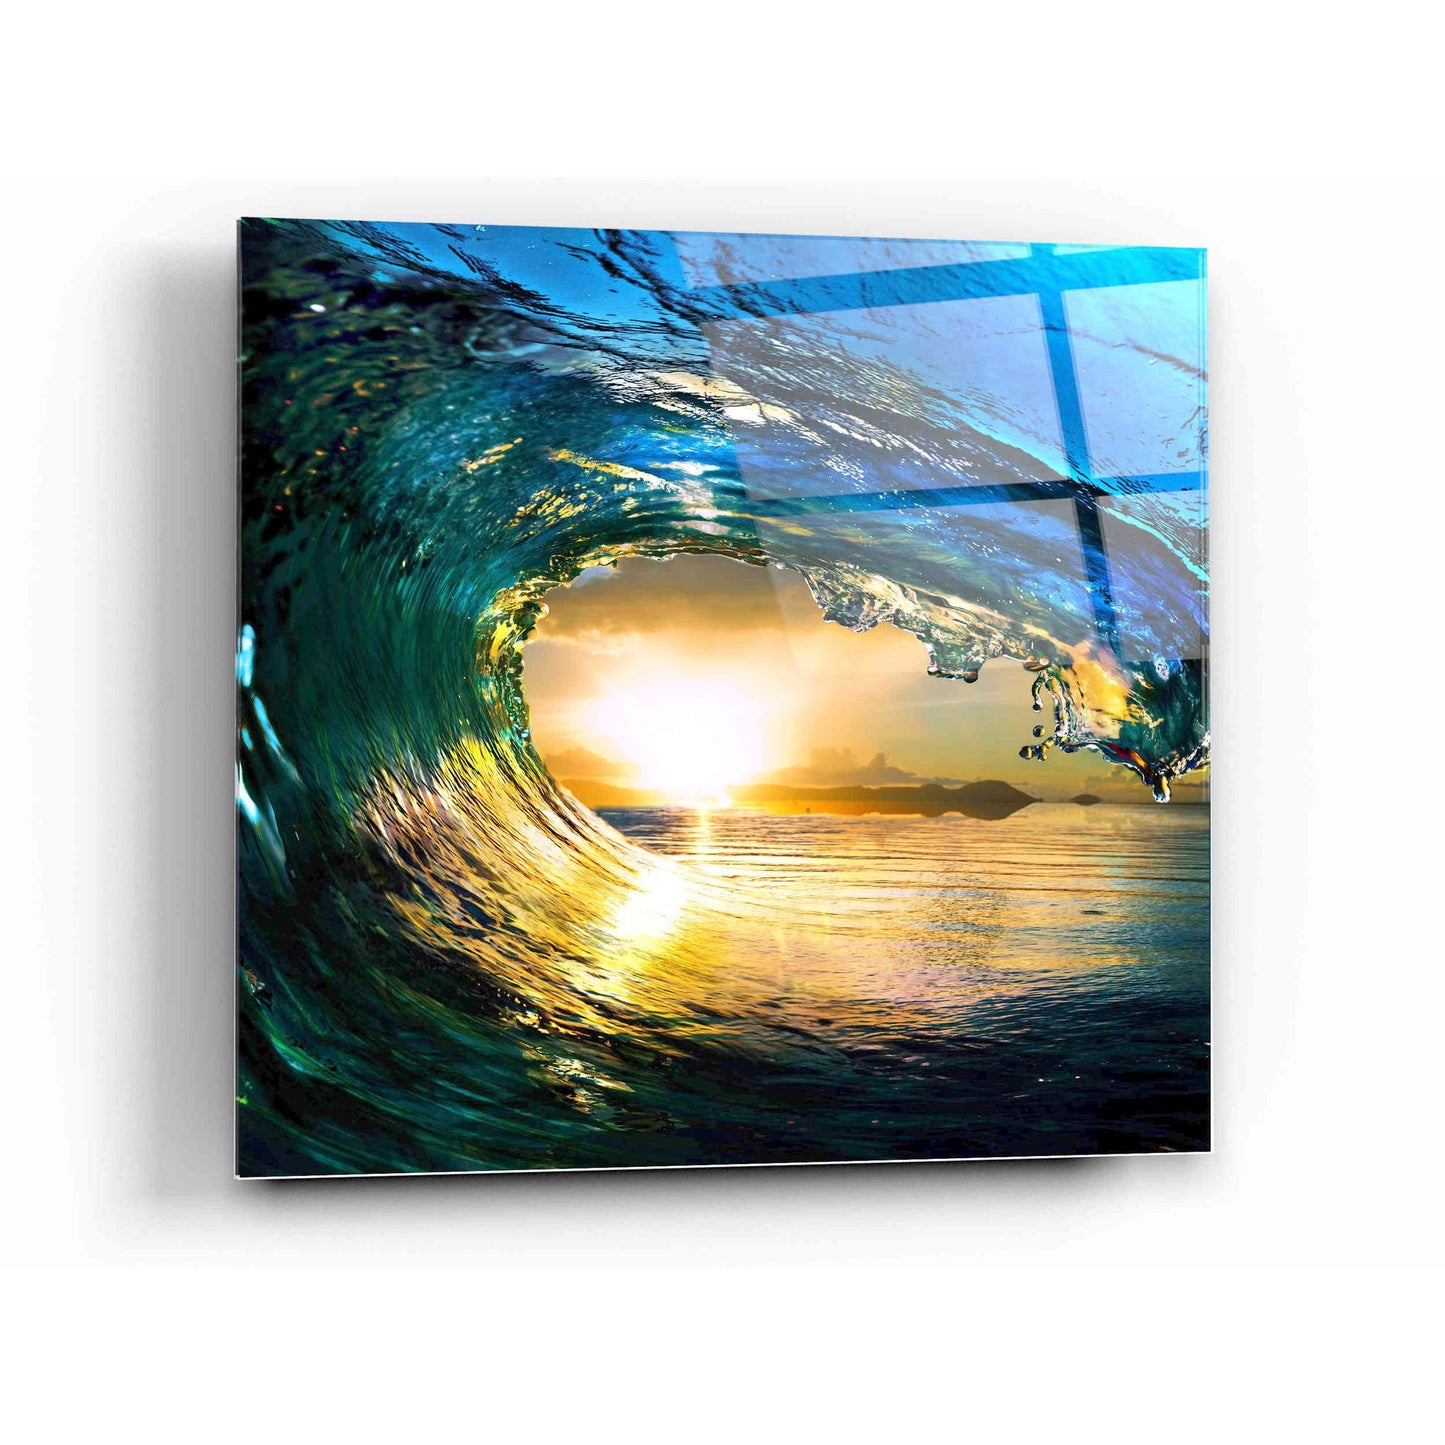 Epic Art 'The Language of Waves' Acrylic Glass Wall Art,12x12